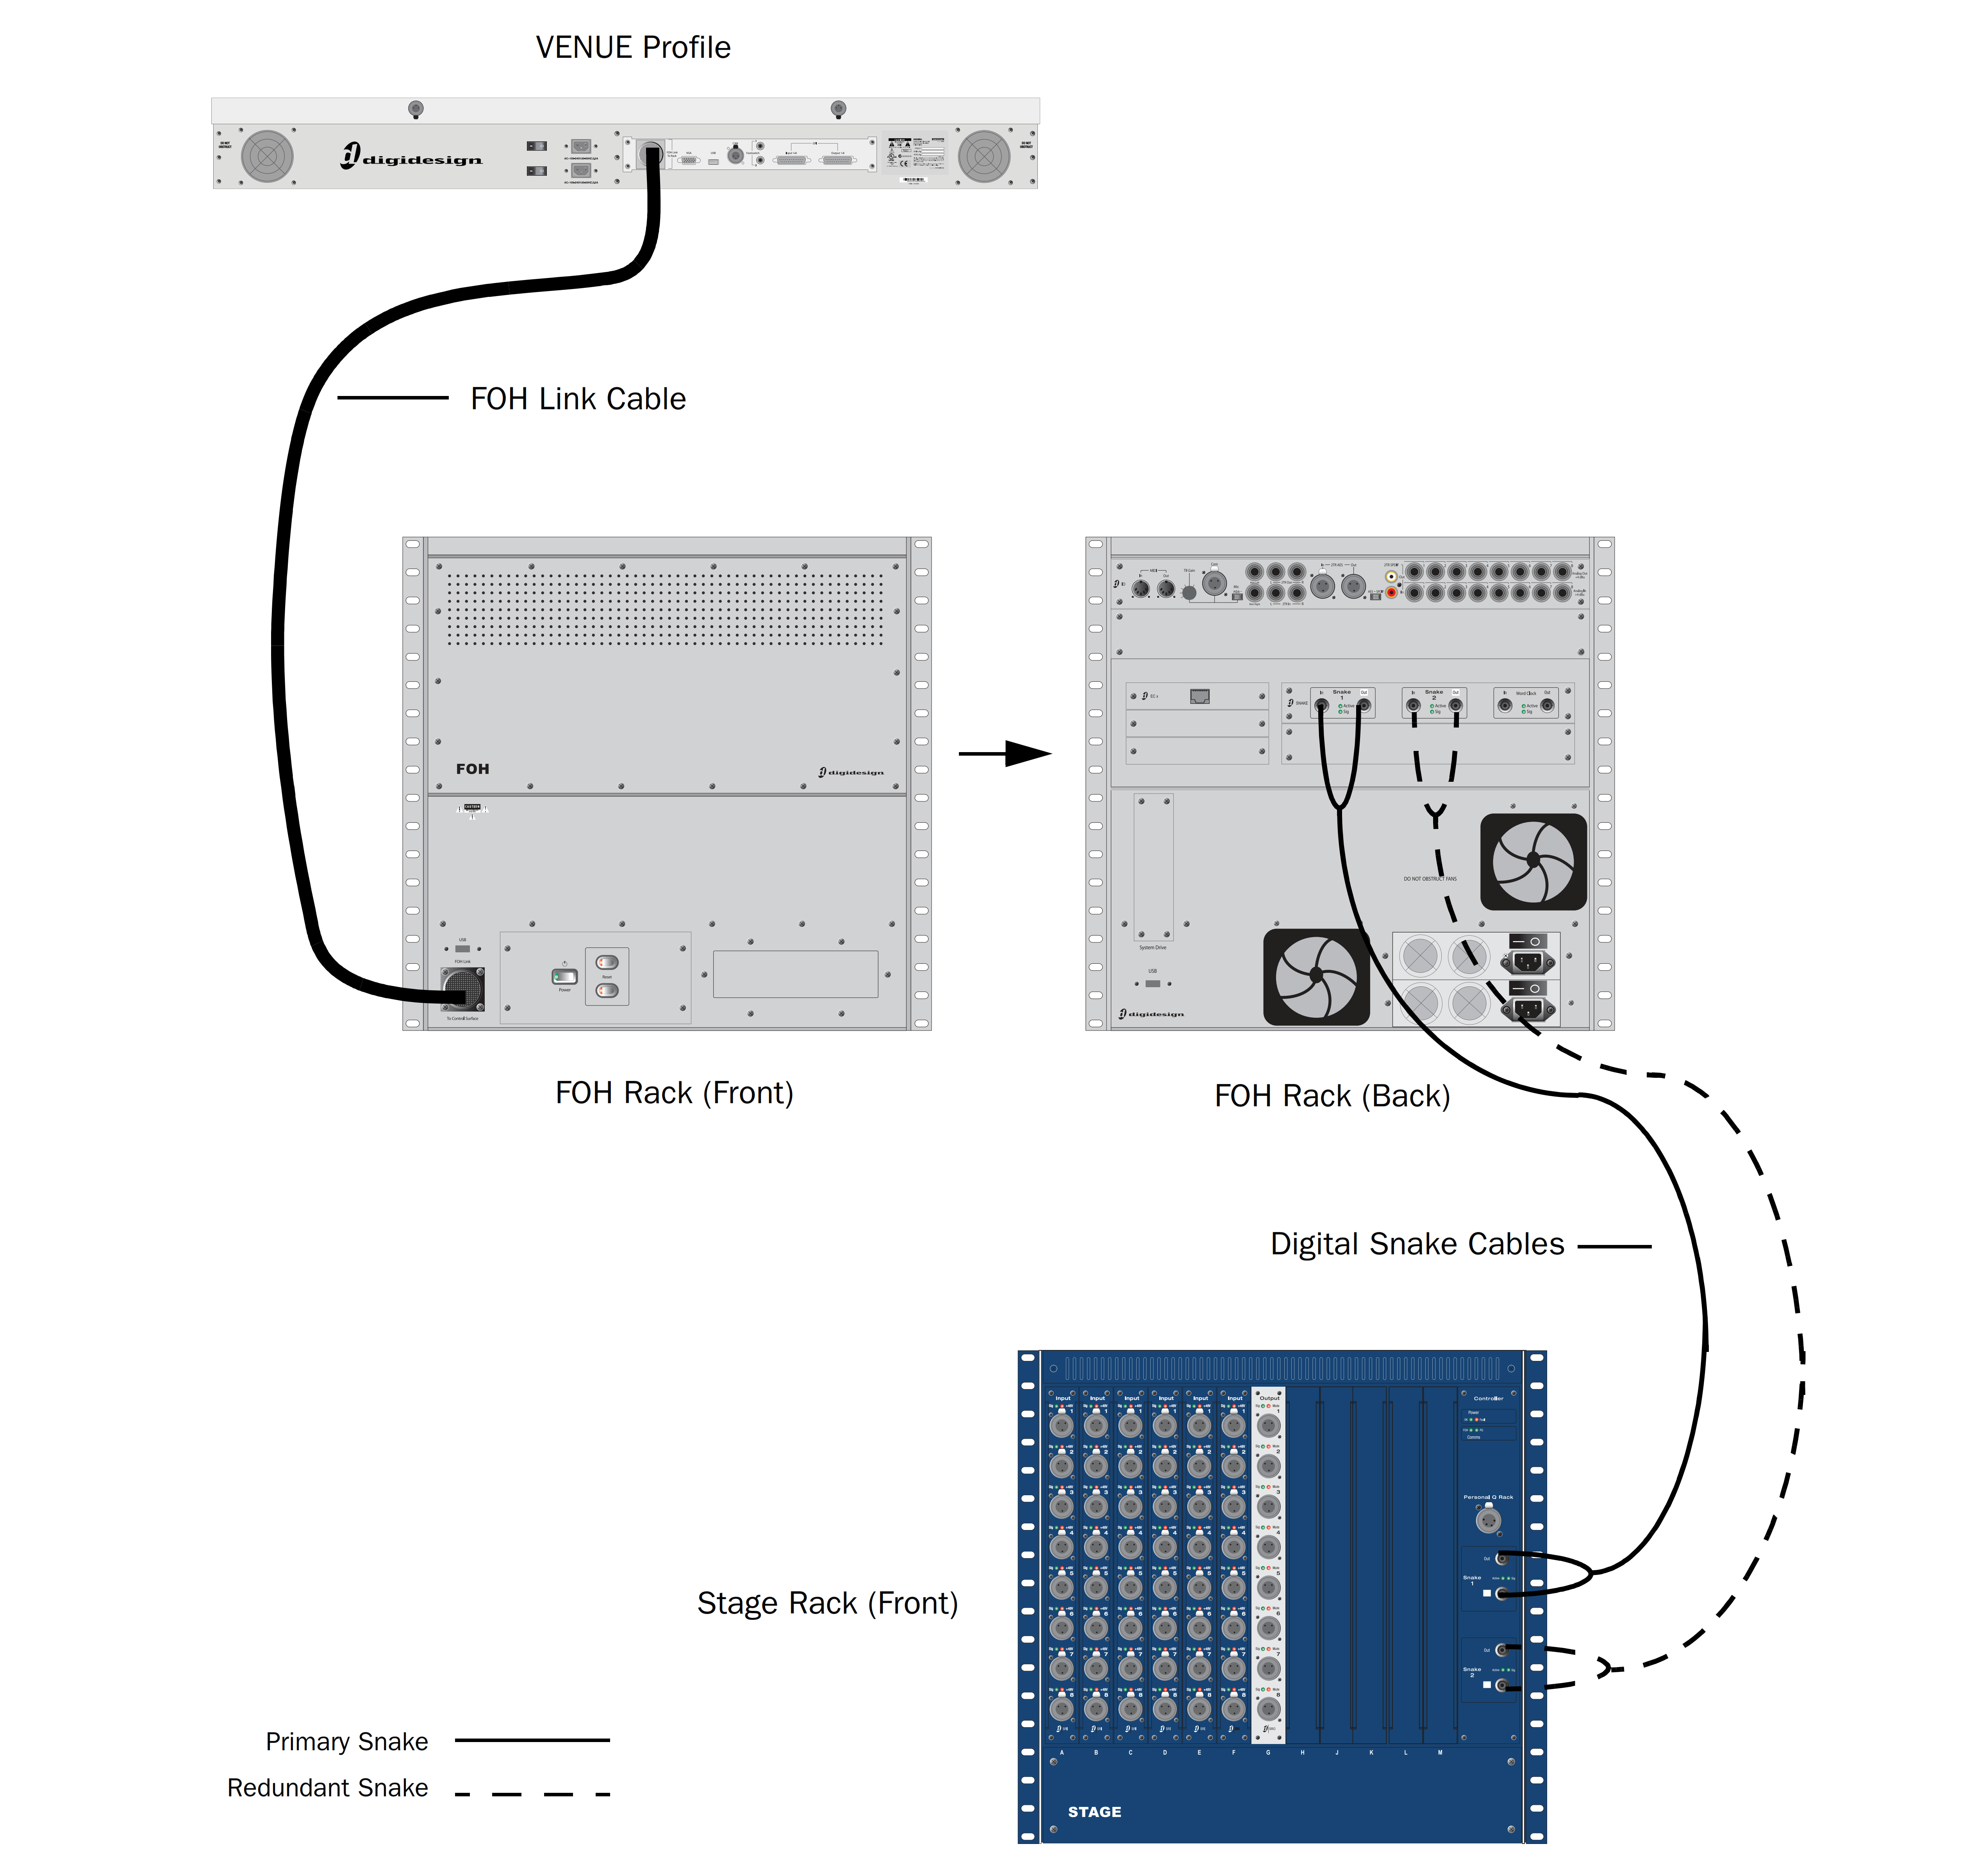 Схема подключения консоли Venue Profile с FOH Rack и Stage Rack 